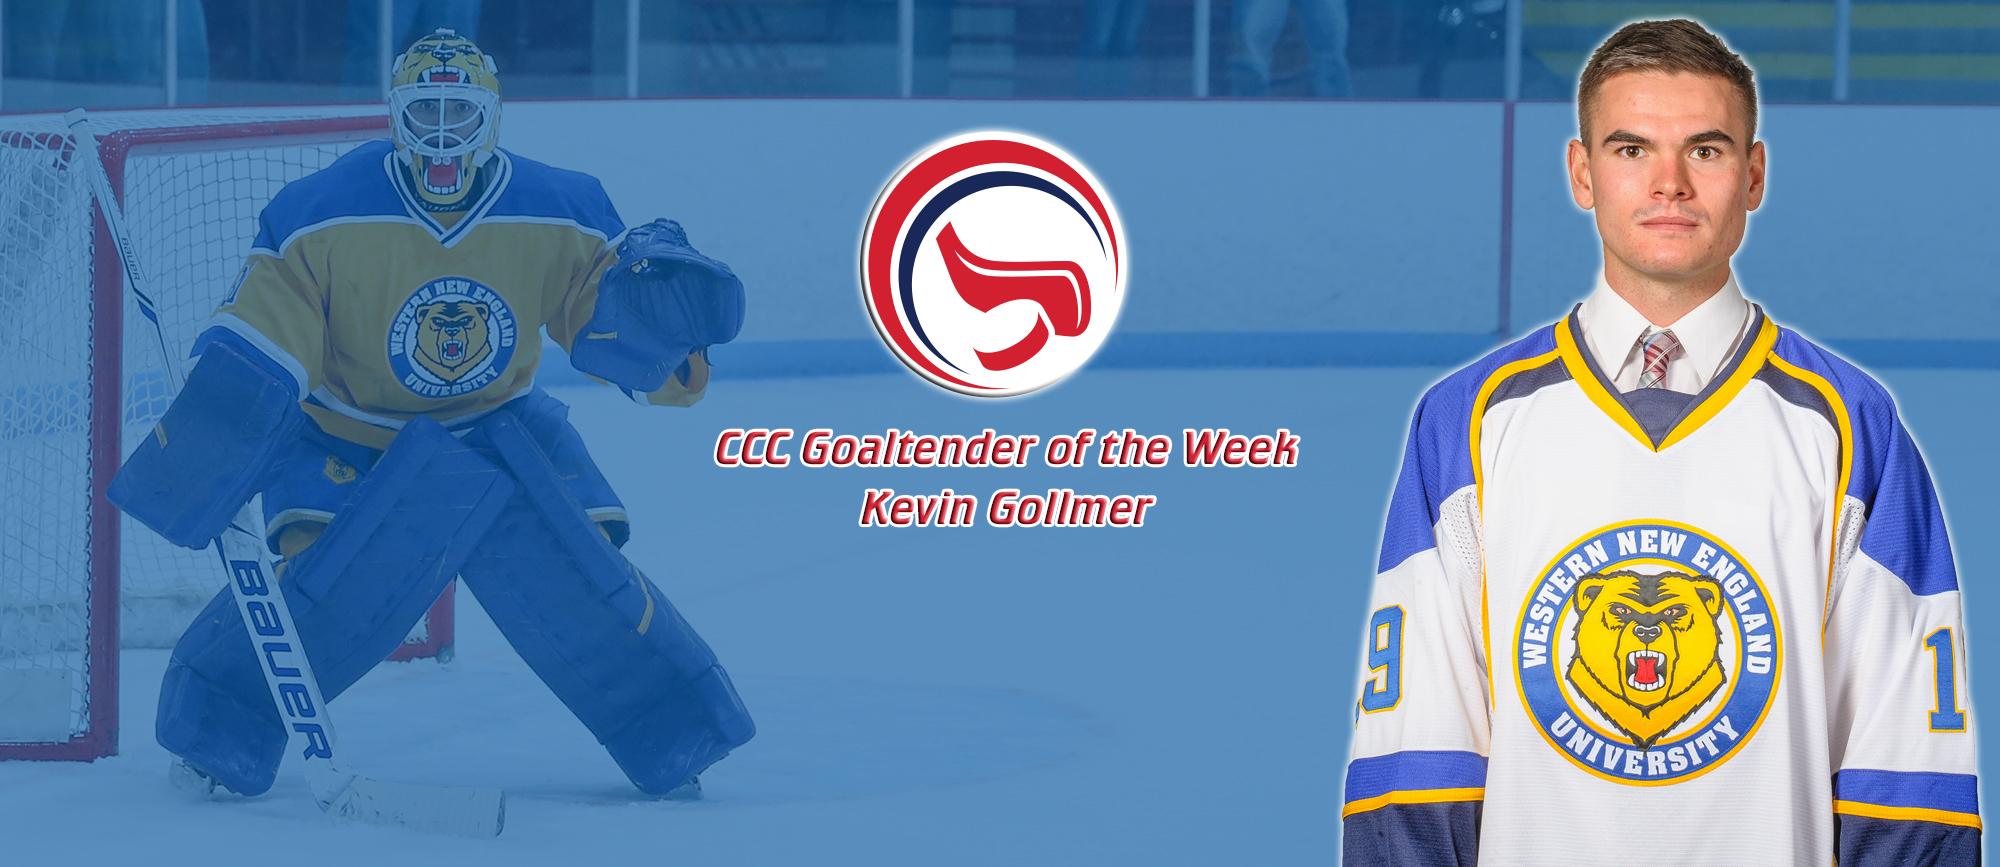 Kevin Gollmer Earns Second Career CCC Goaltender of the Week Award